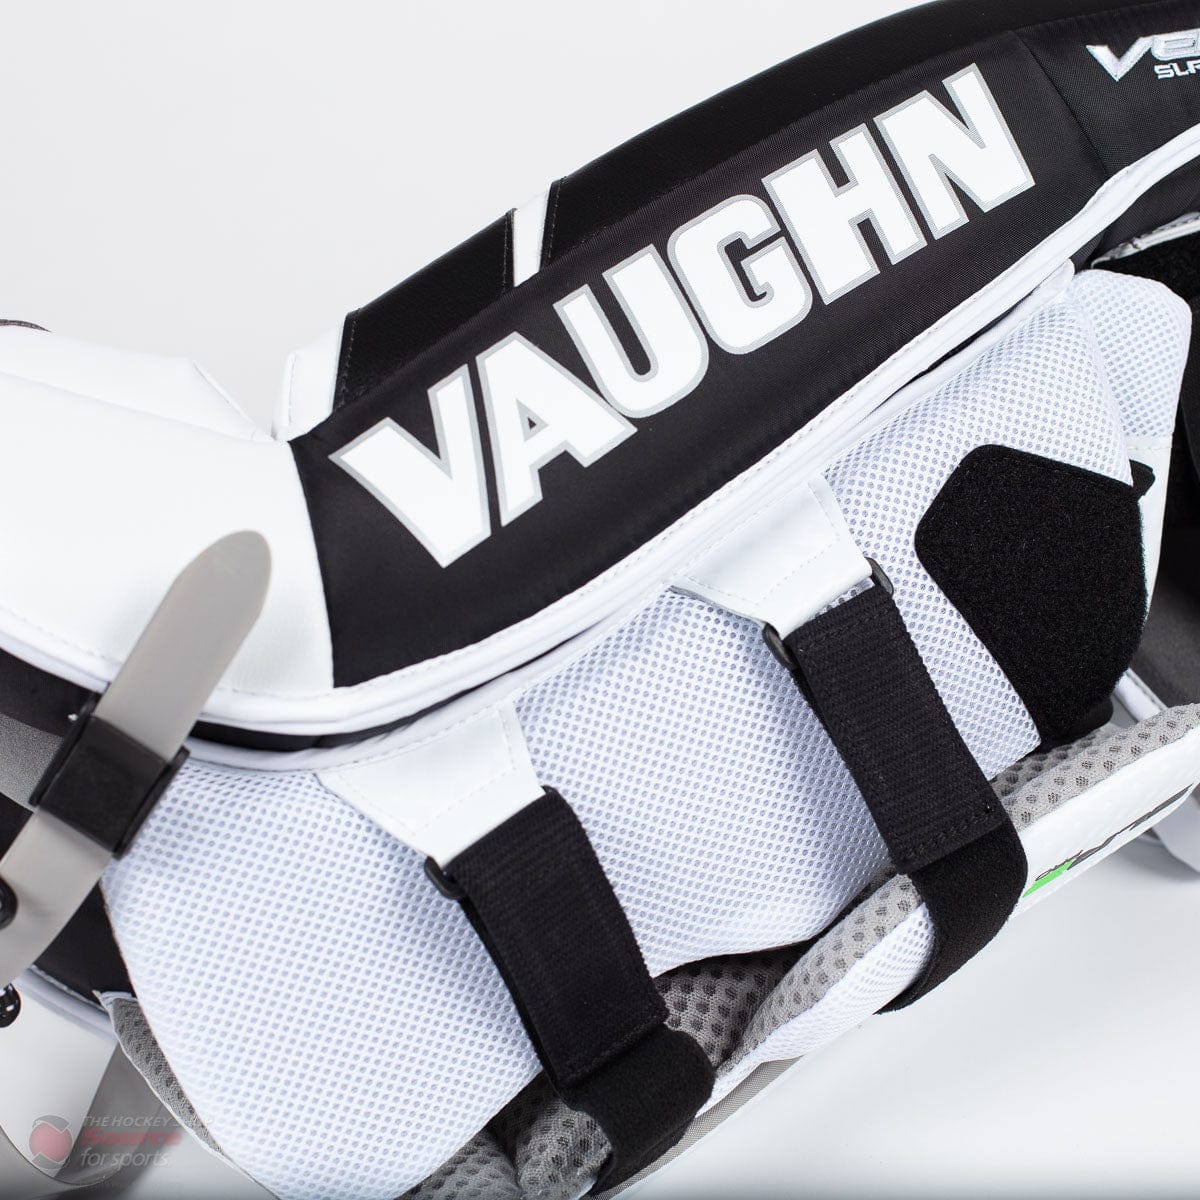 Vaughn Ventus SLR2 Pro Senior Goalie Leg Pads